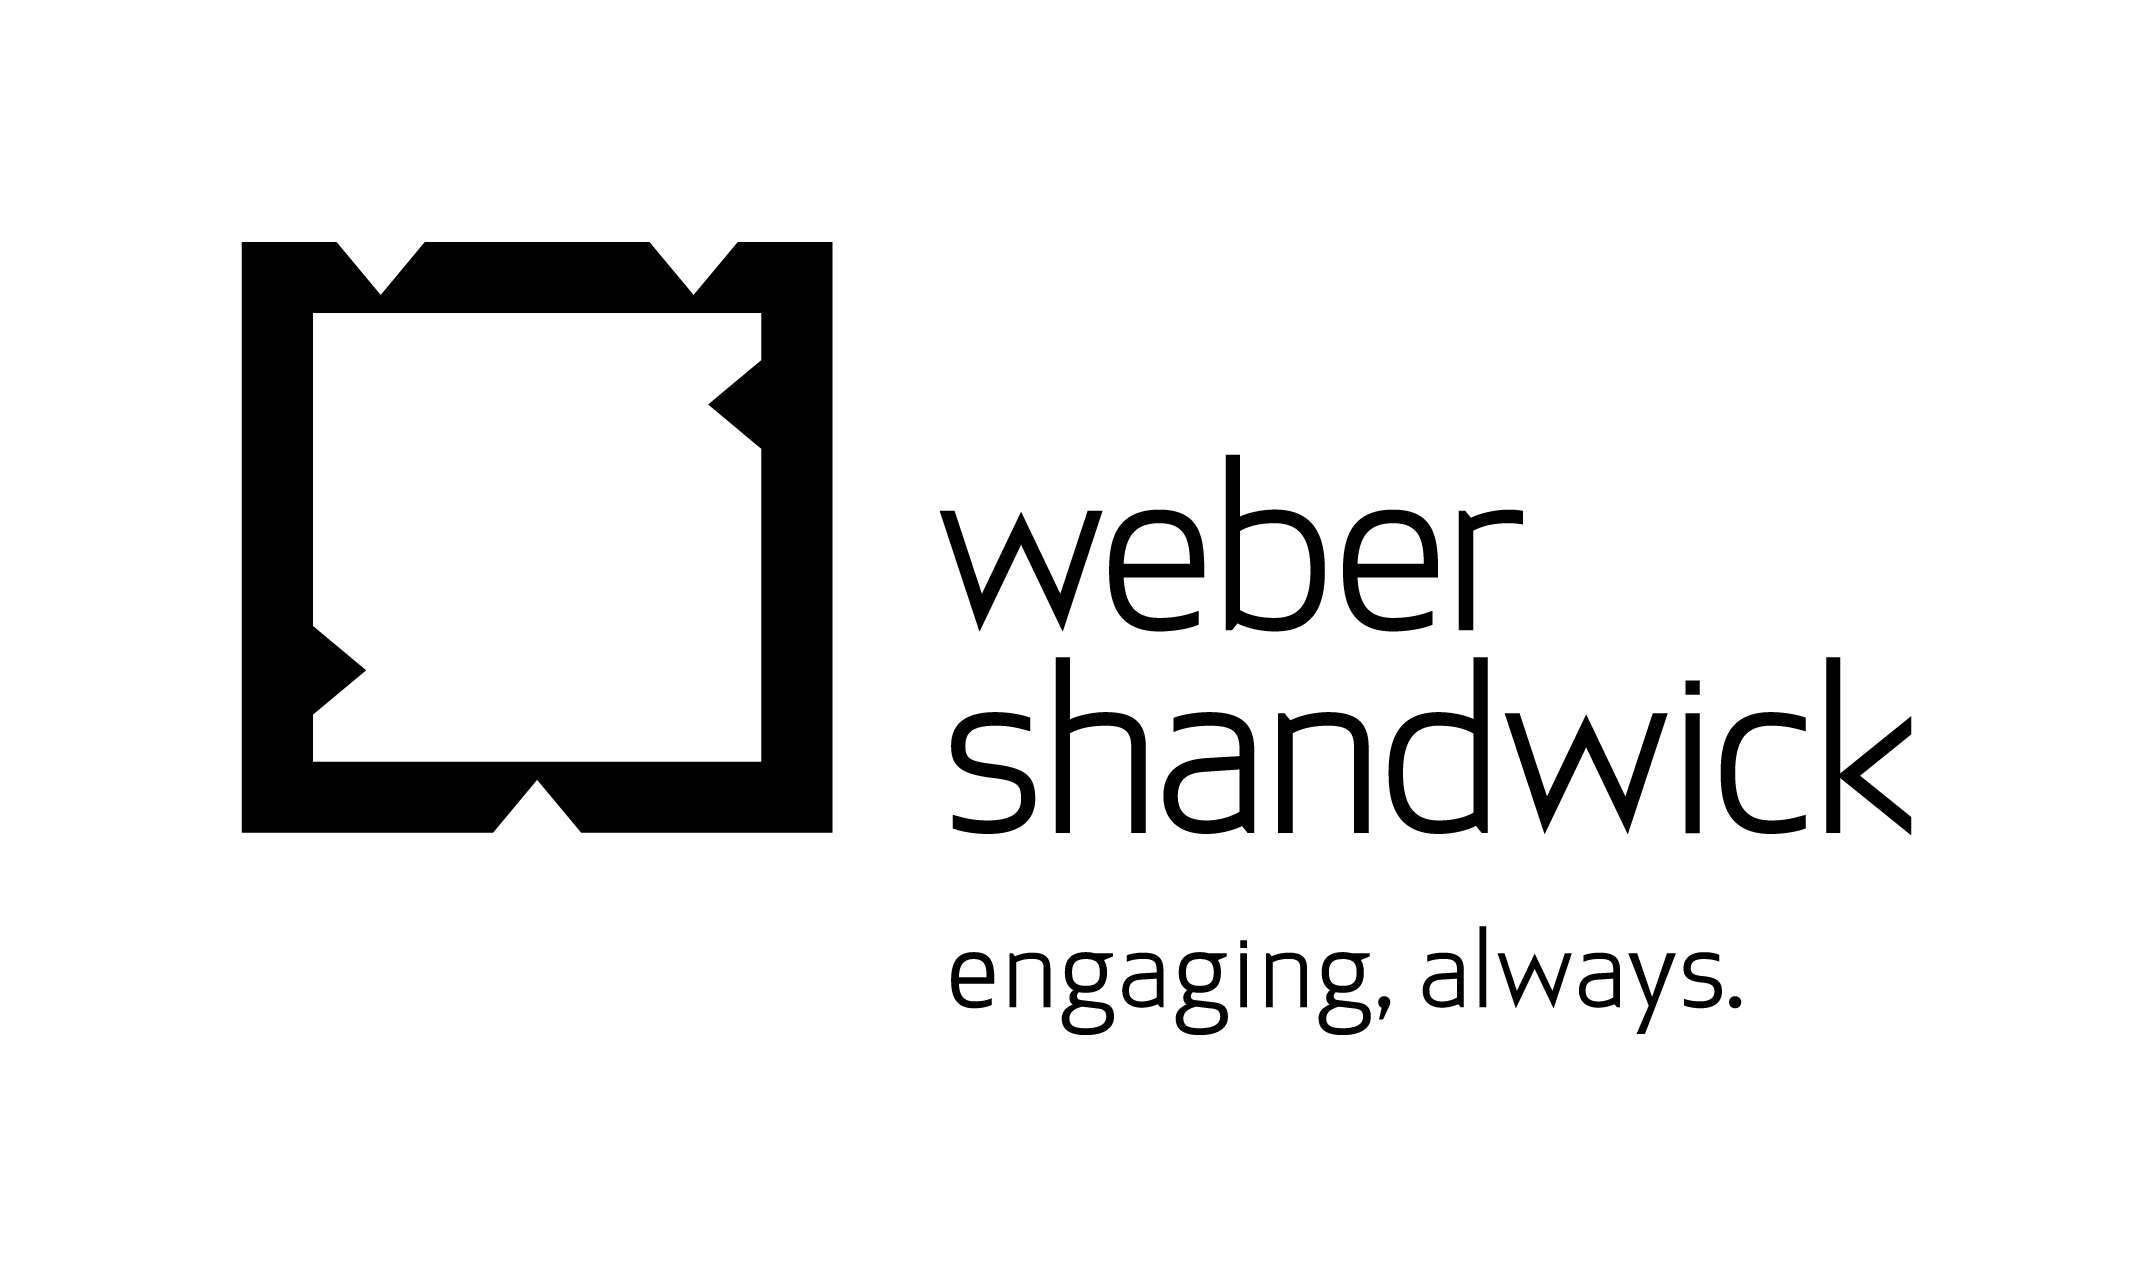  Top Digital Public Relations Agency Logo: Weber Shandwick